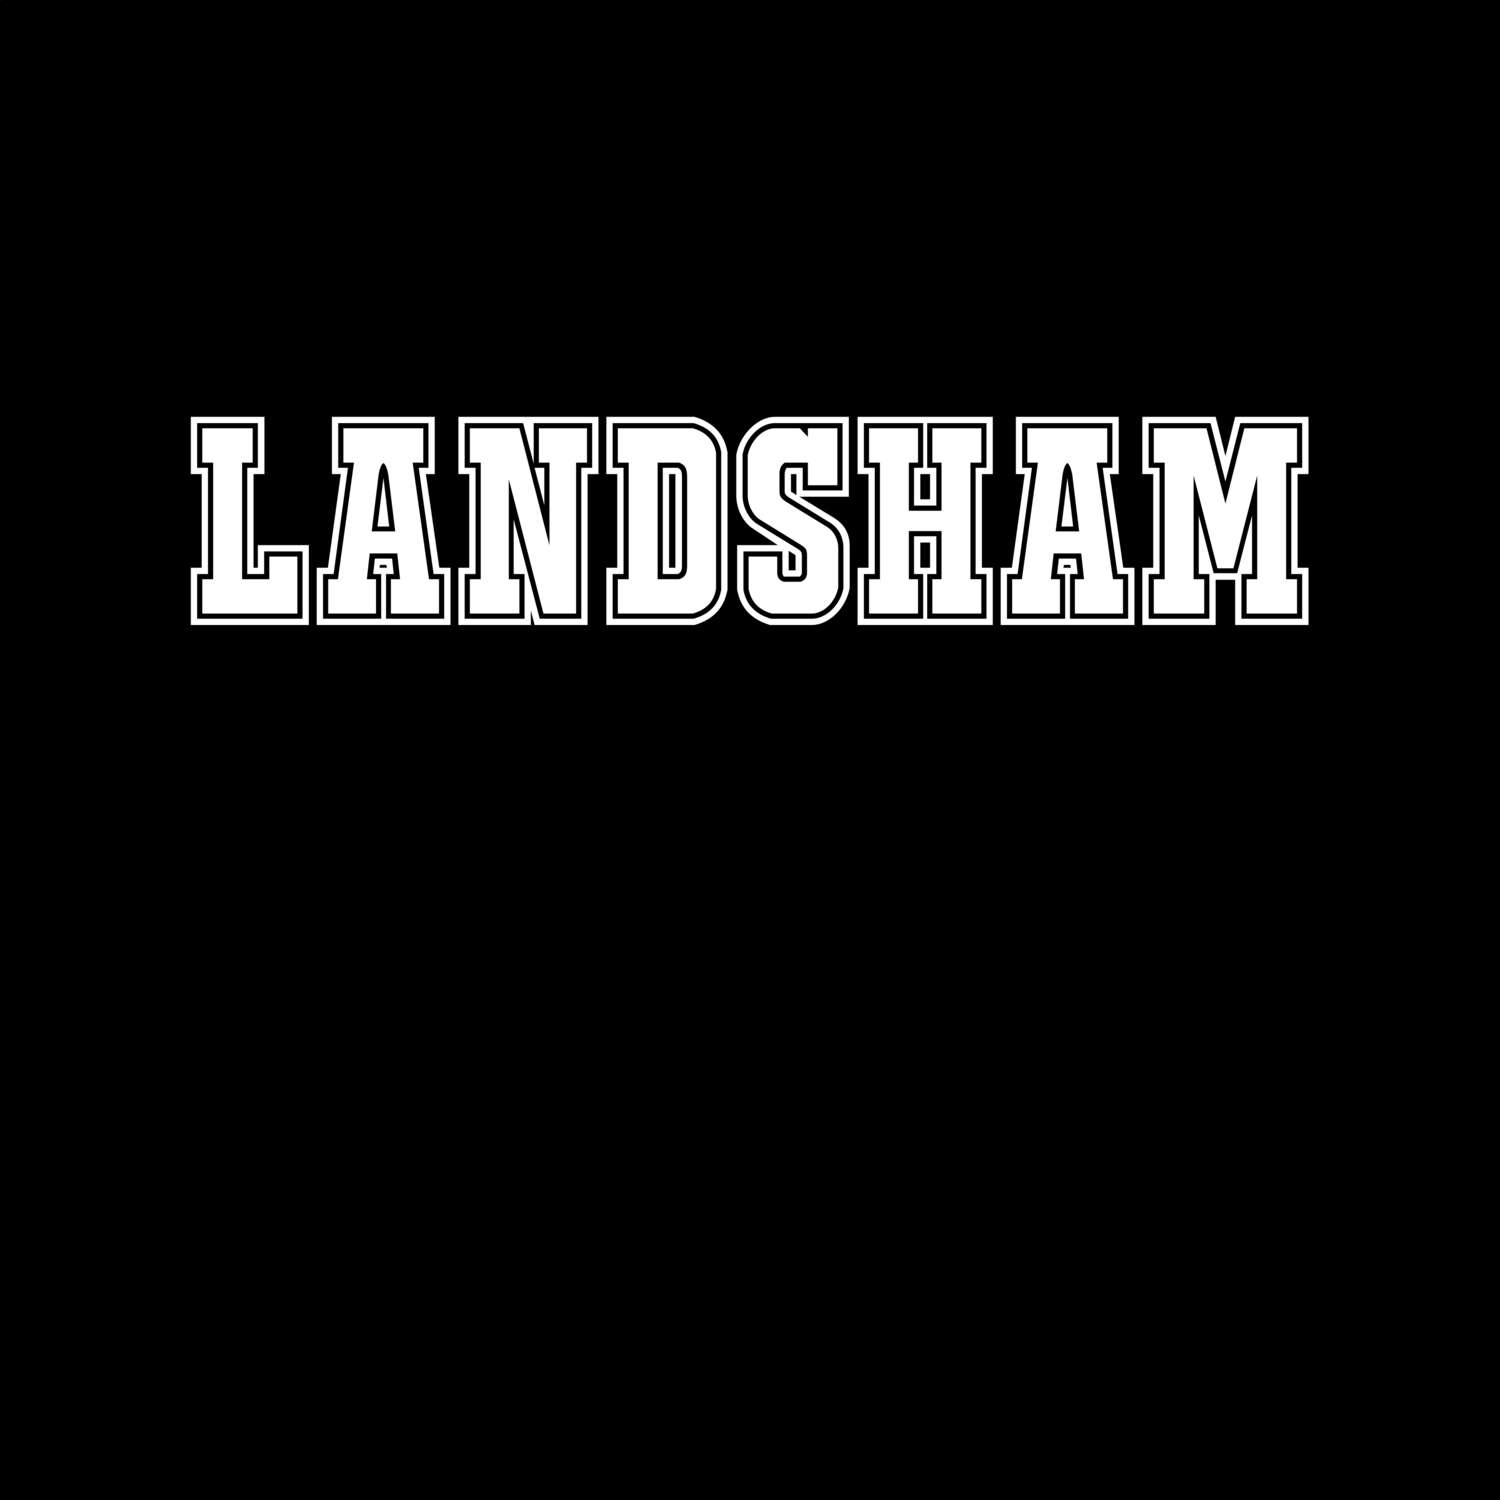 Landsham T-Shirt »Classic«